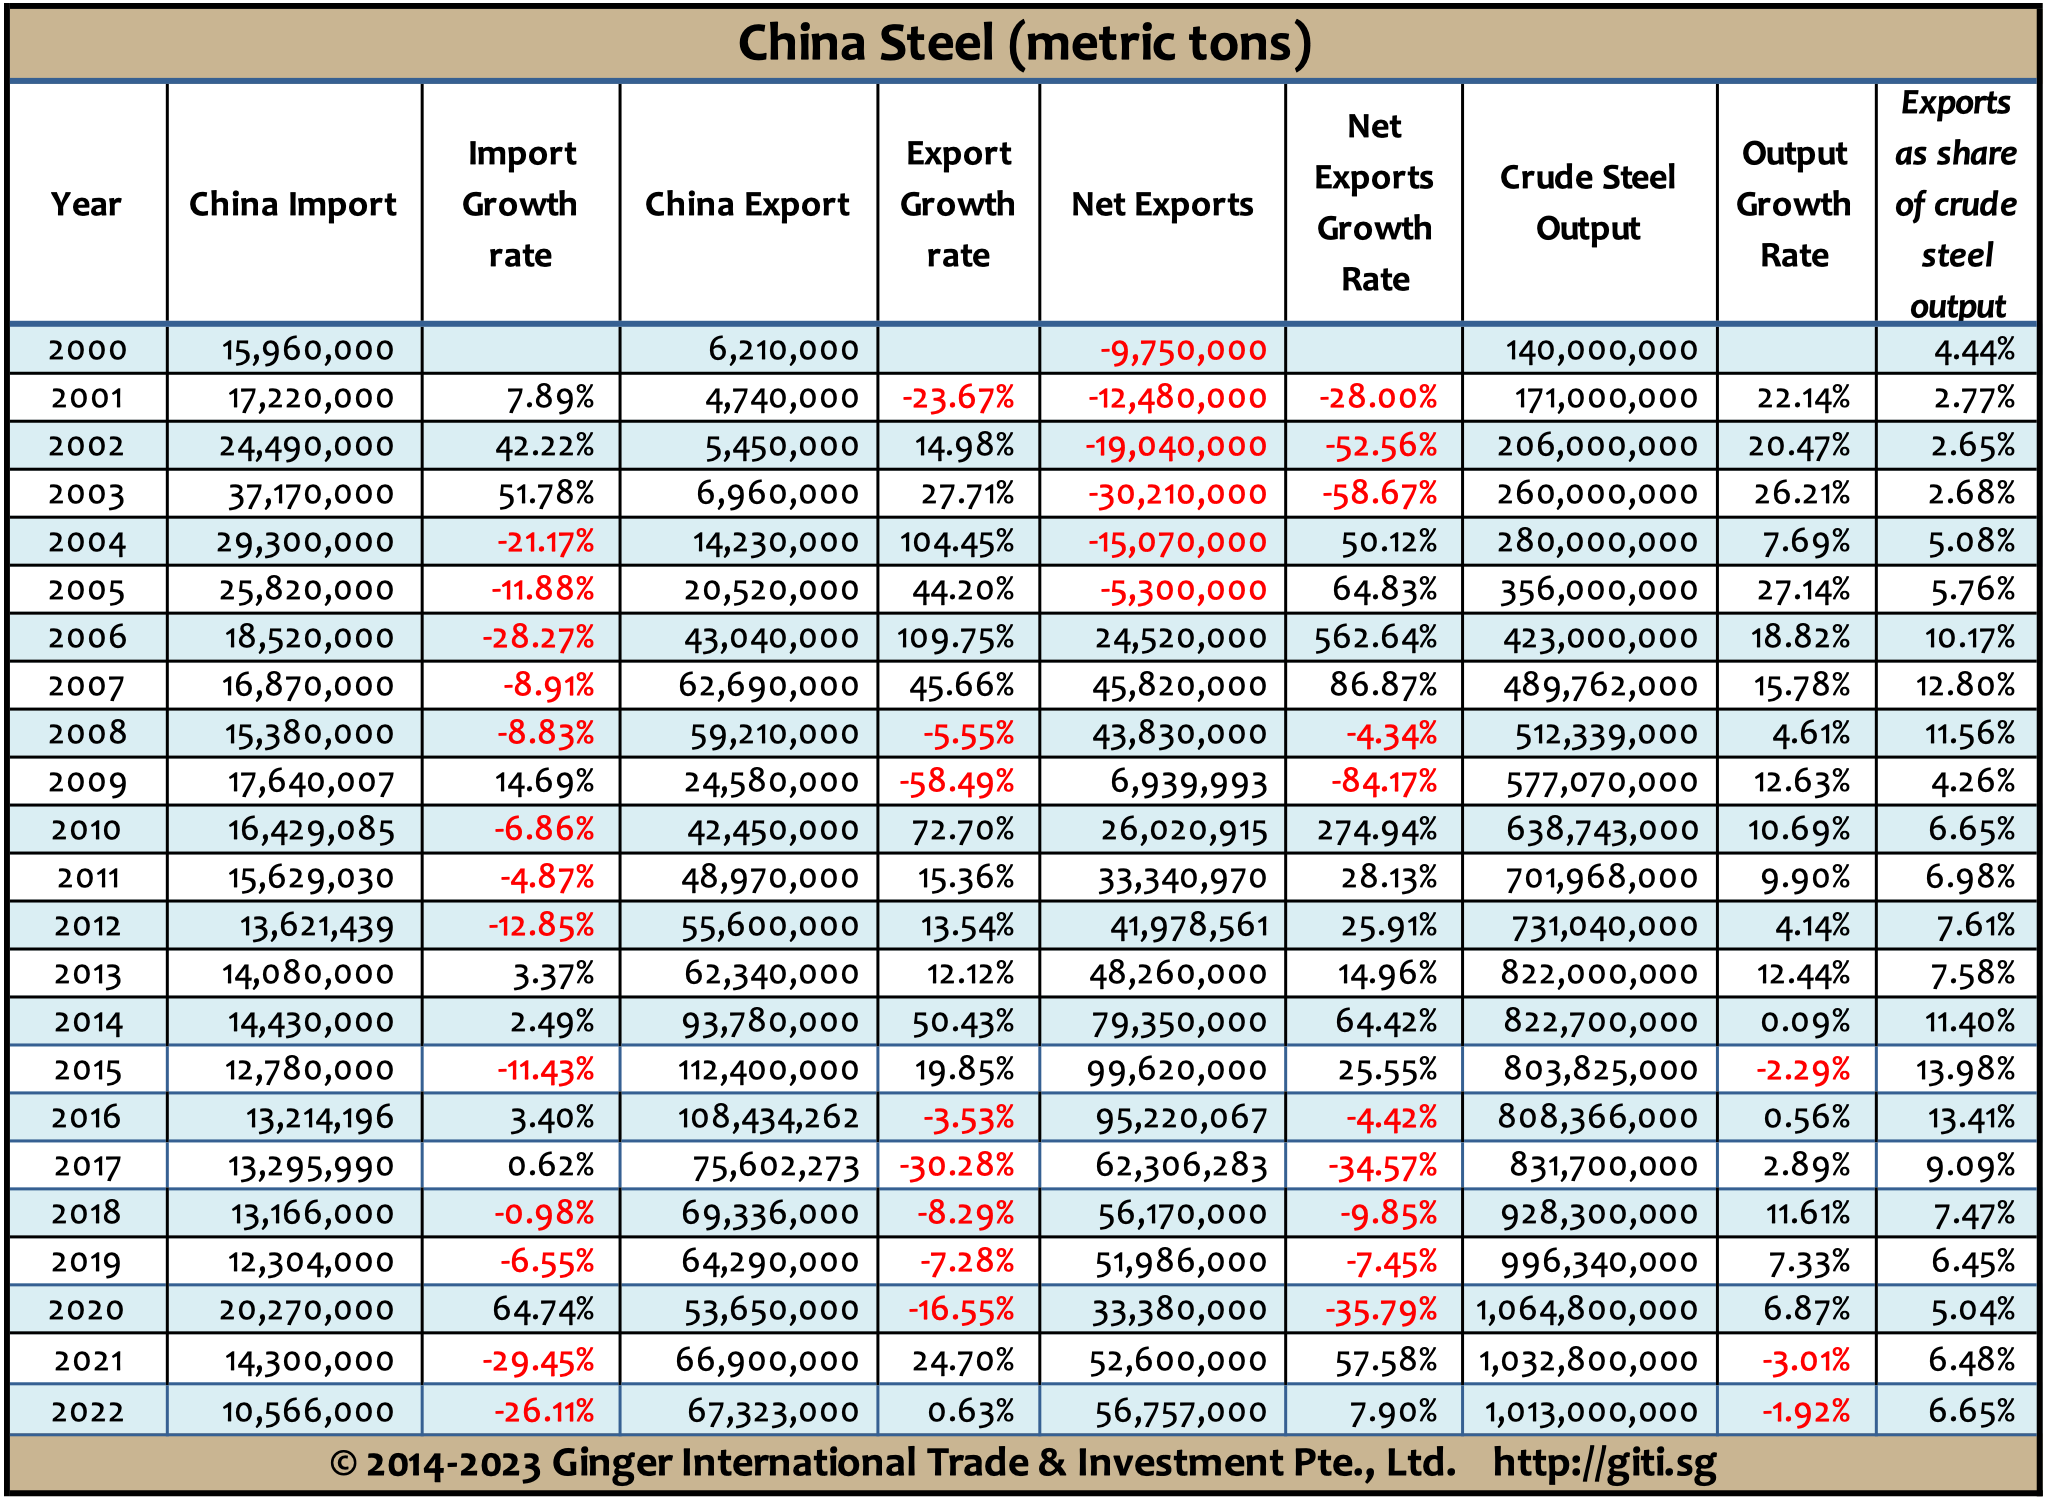 China Steel Trade 2000-2022